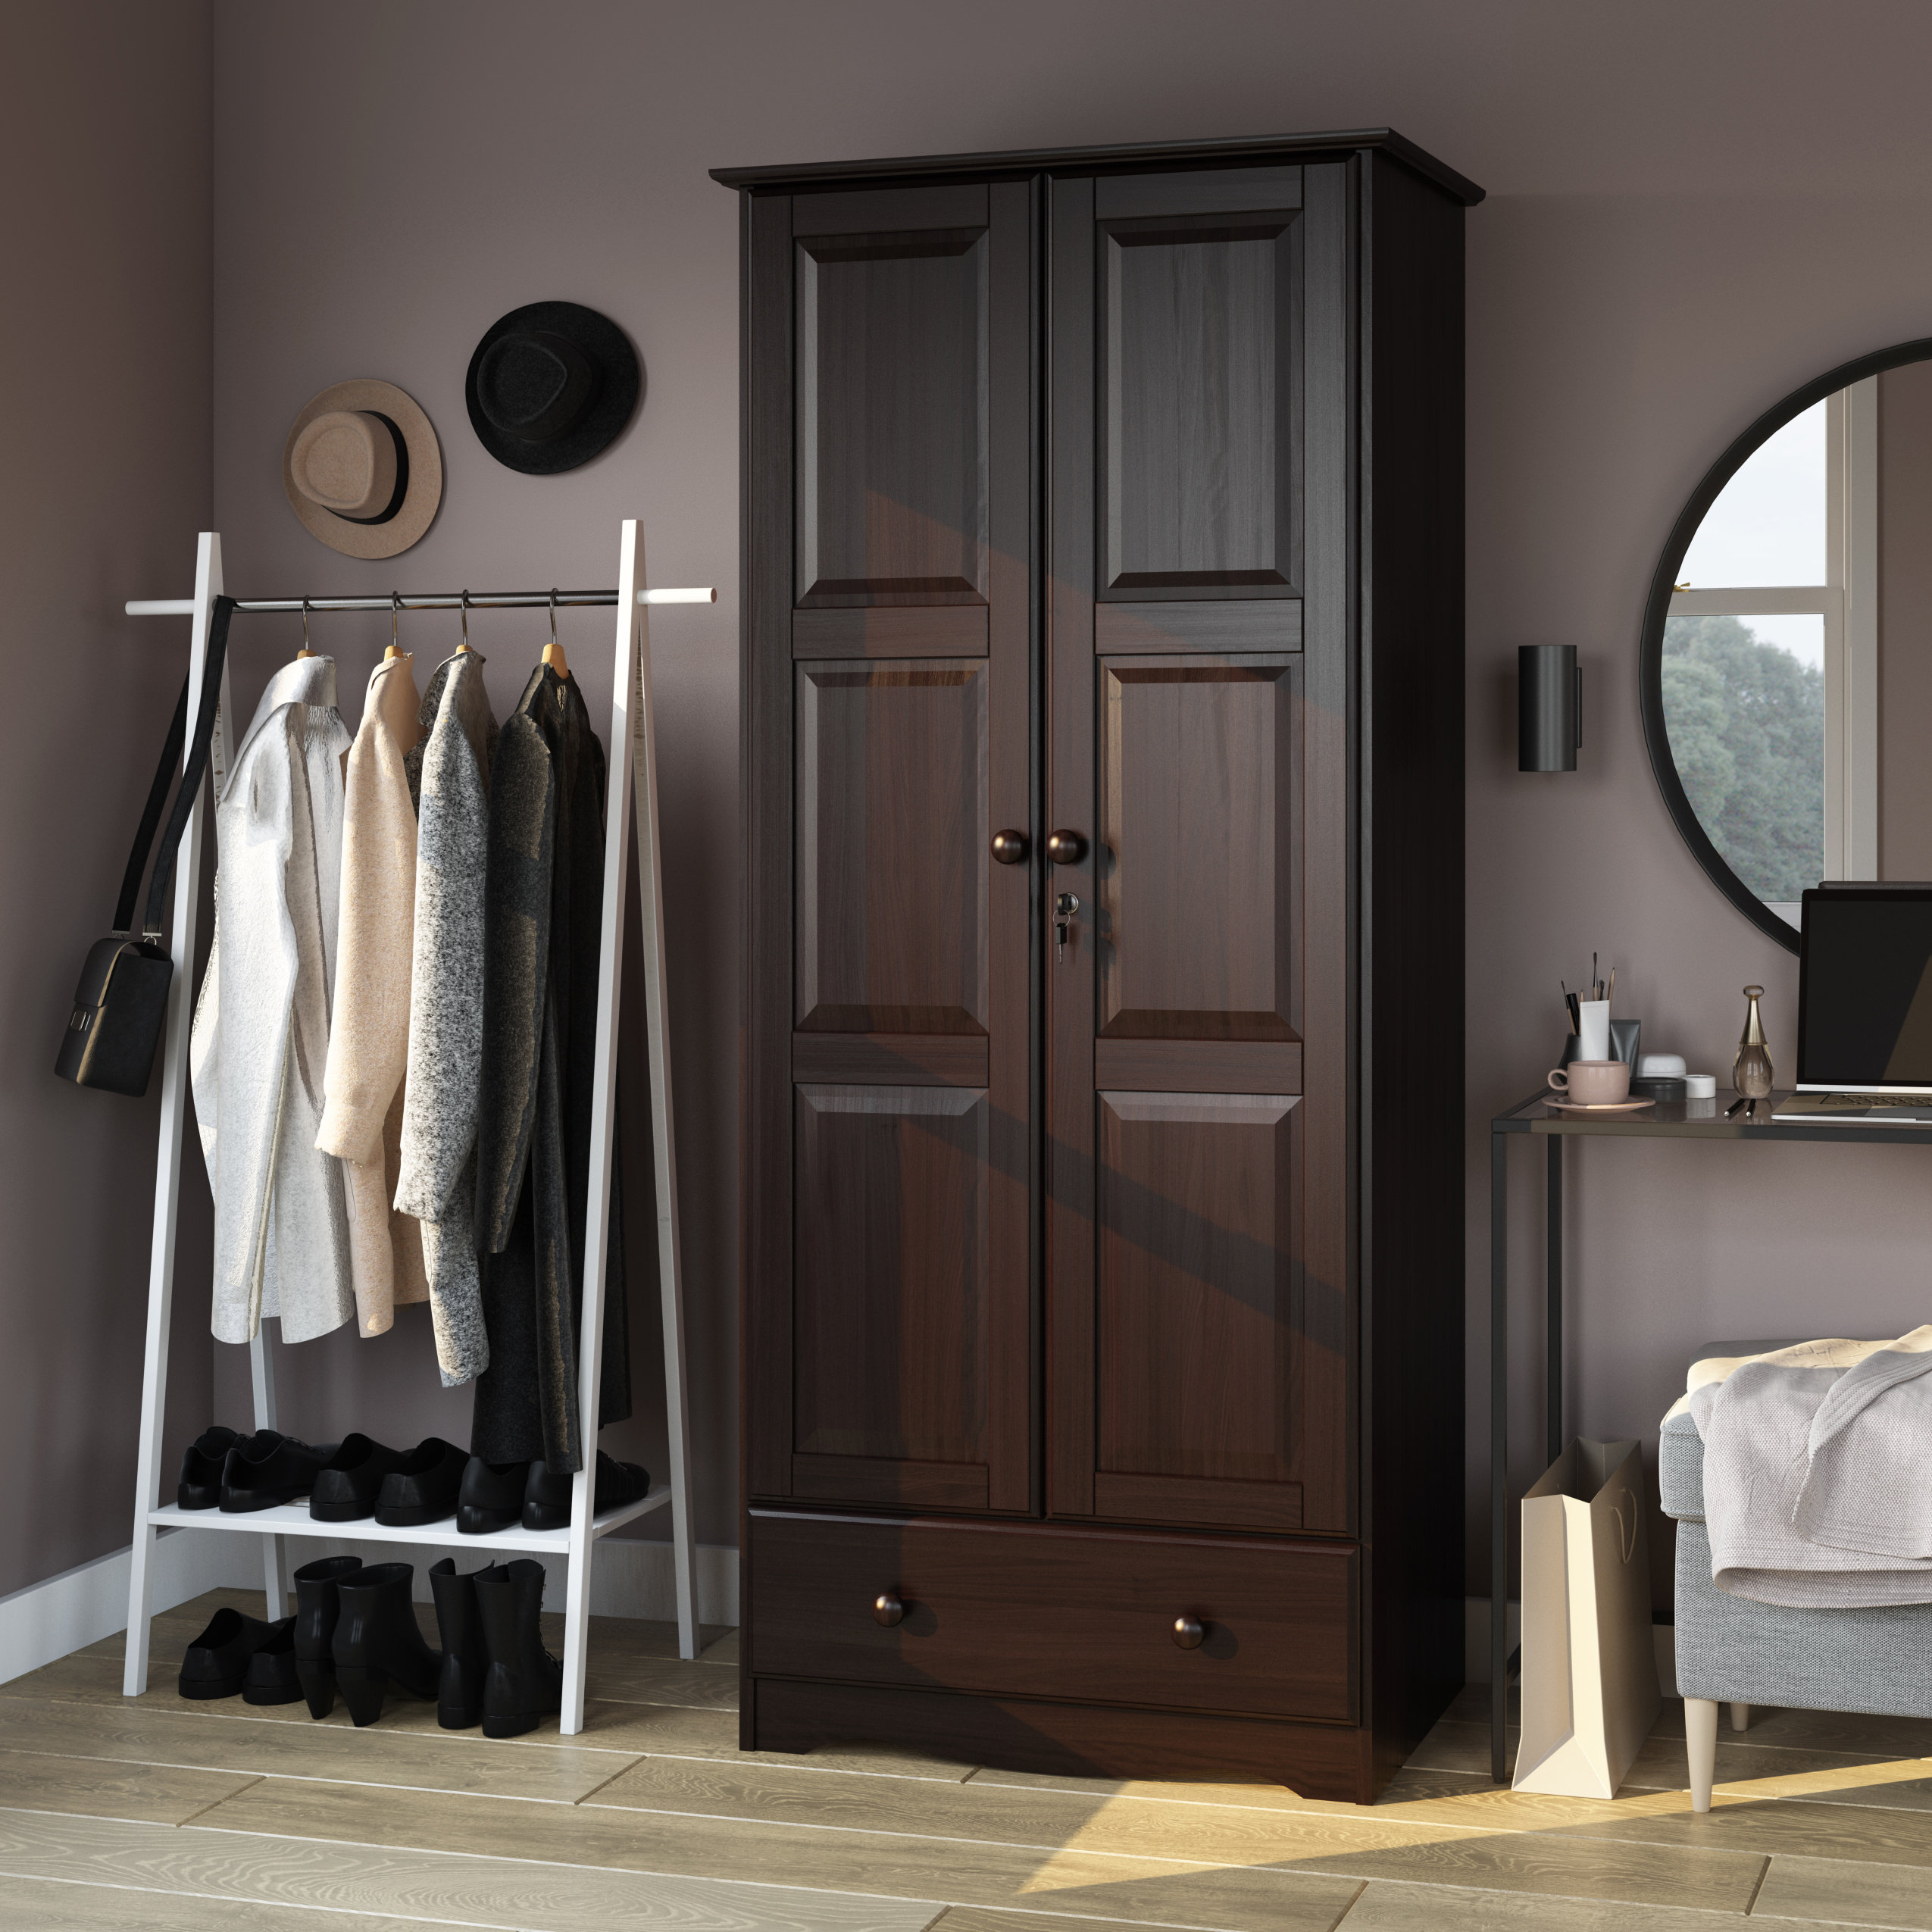 Wardrobe Bedroom Clothes Storage Organizer Closet Pine Panama Range Millwood Pines Color: Gray